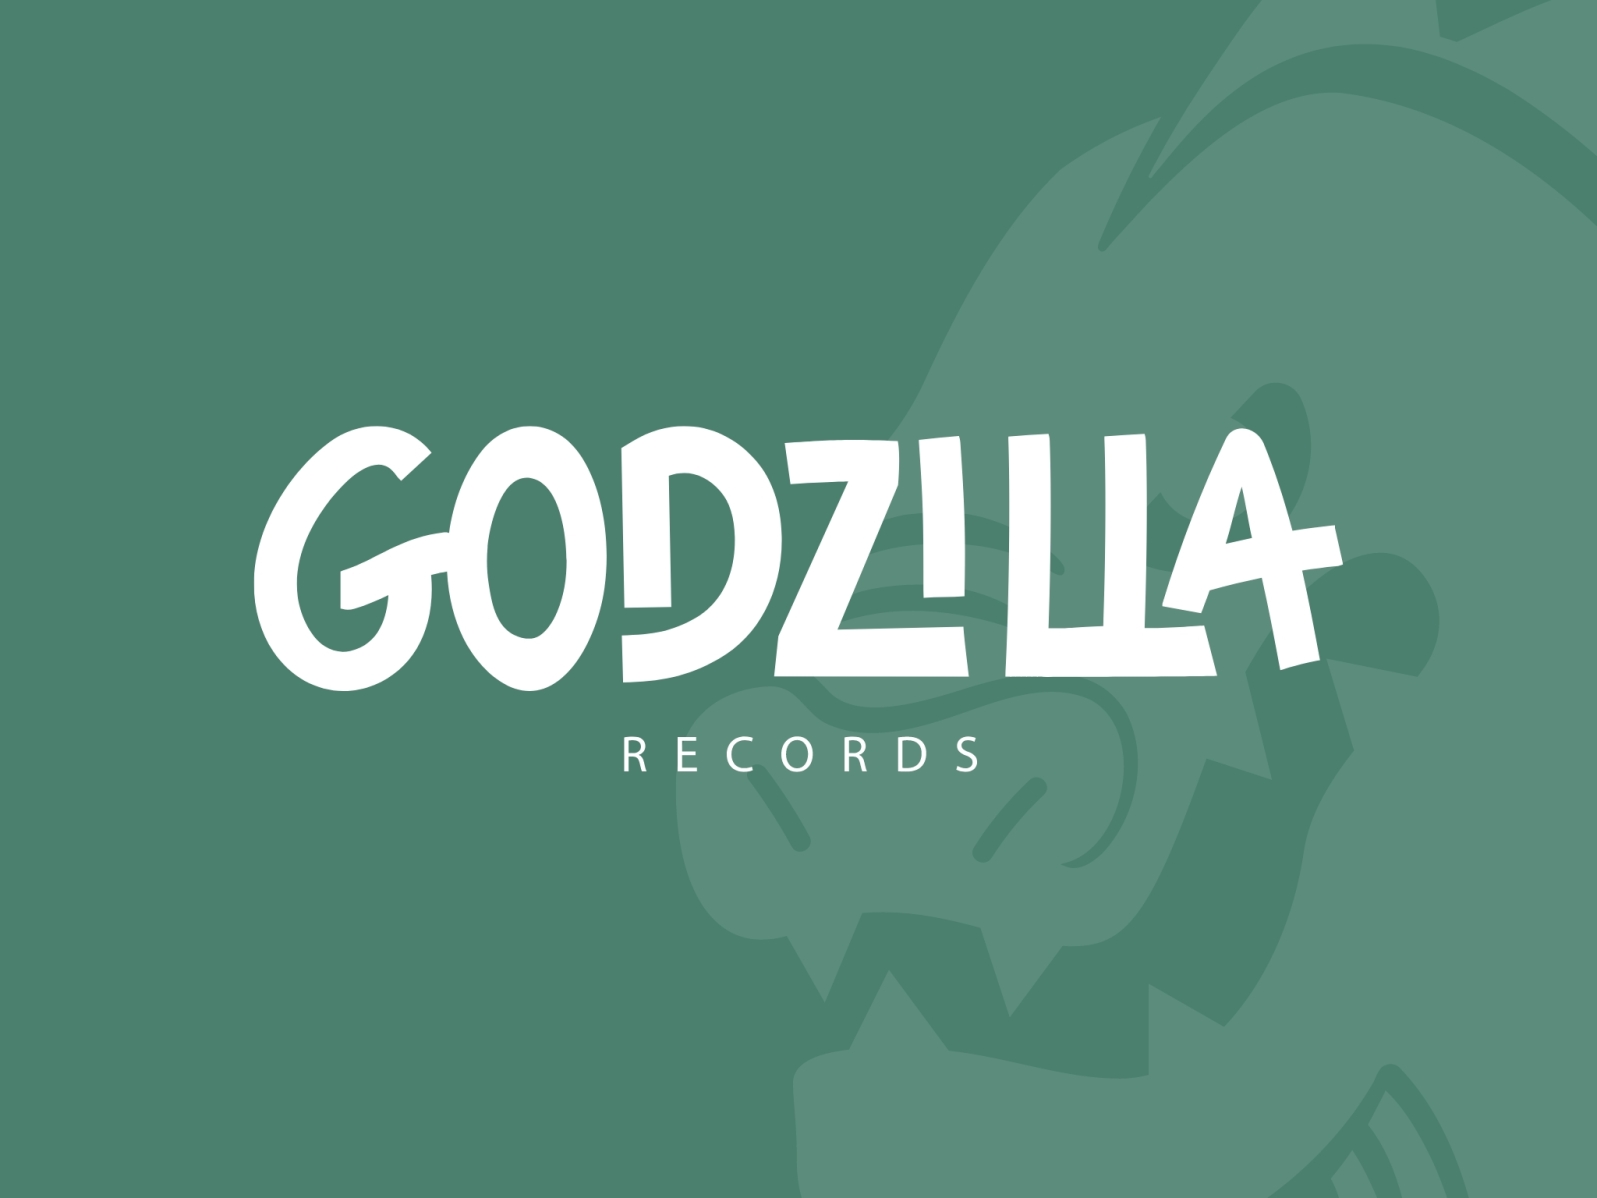 Godzilla - Type Custom by Kactouz Studio on Dribbble